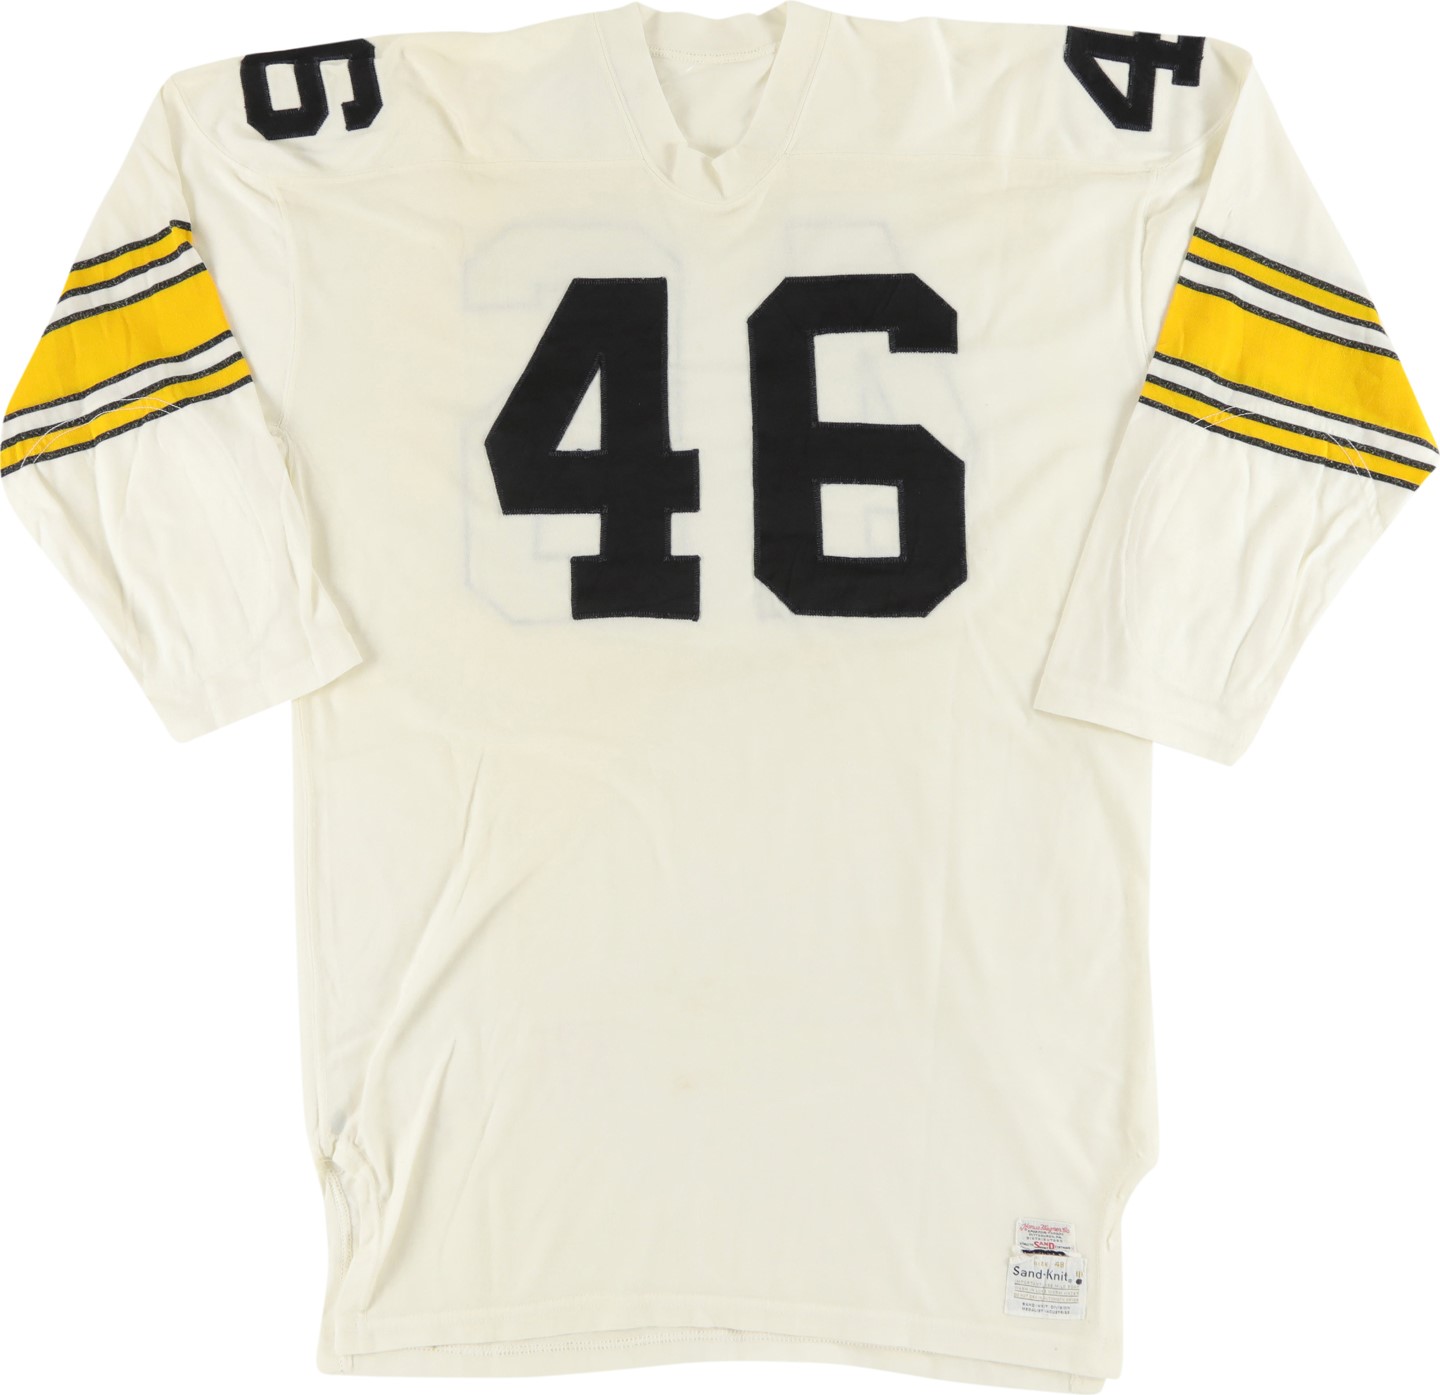 - Circa 1960s #46 Blank Pittsburgh Steelers Game Worn Jersey